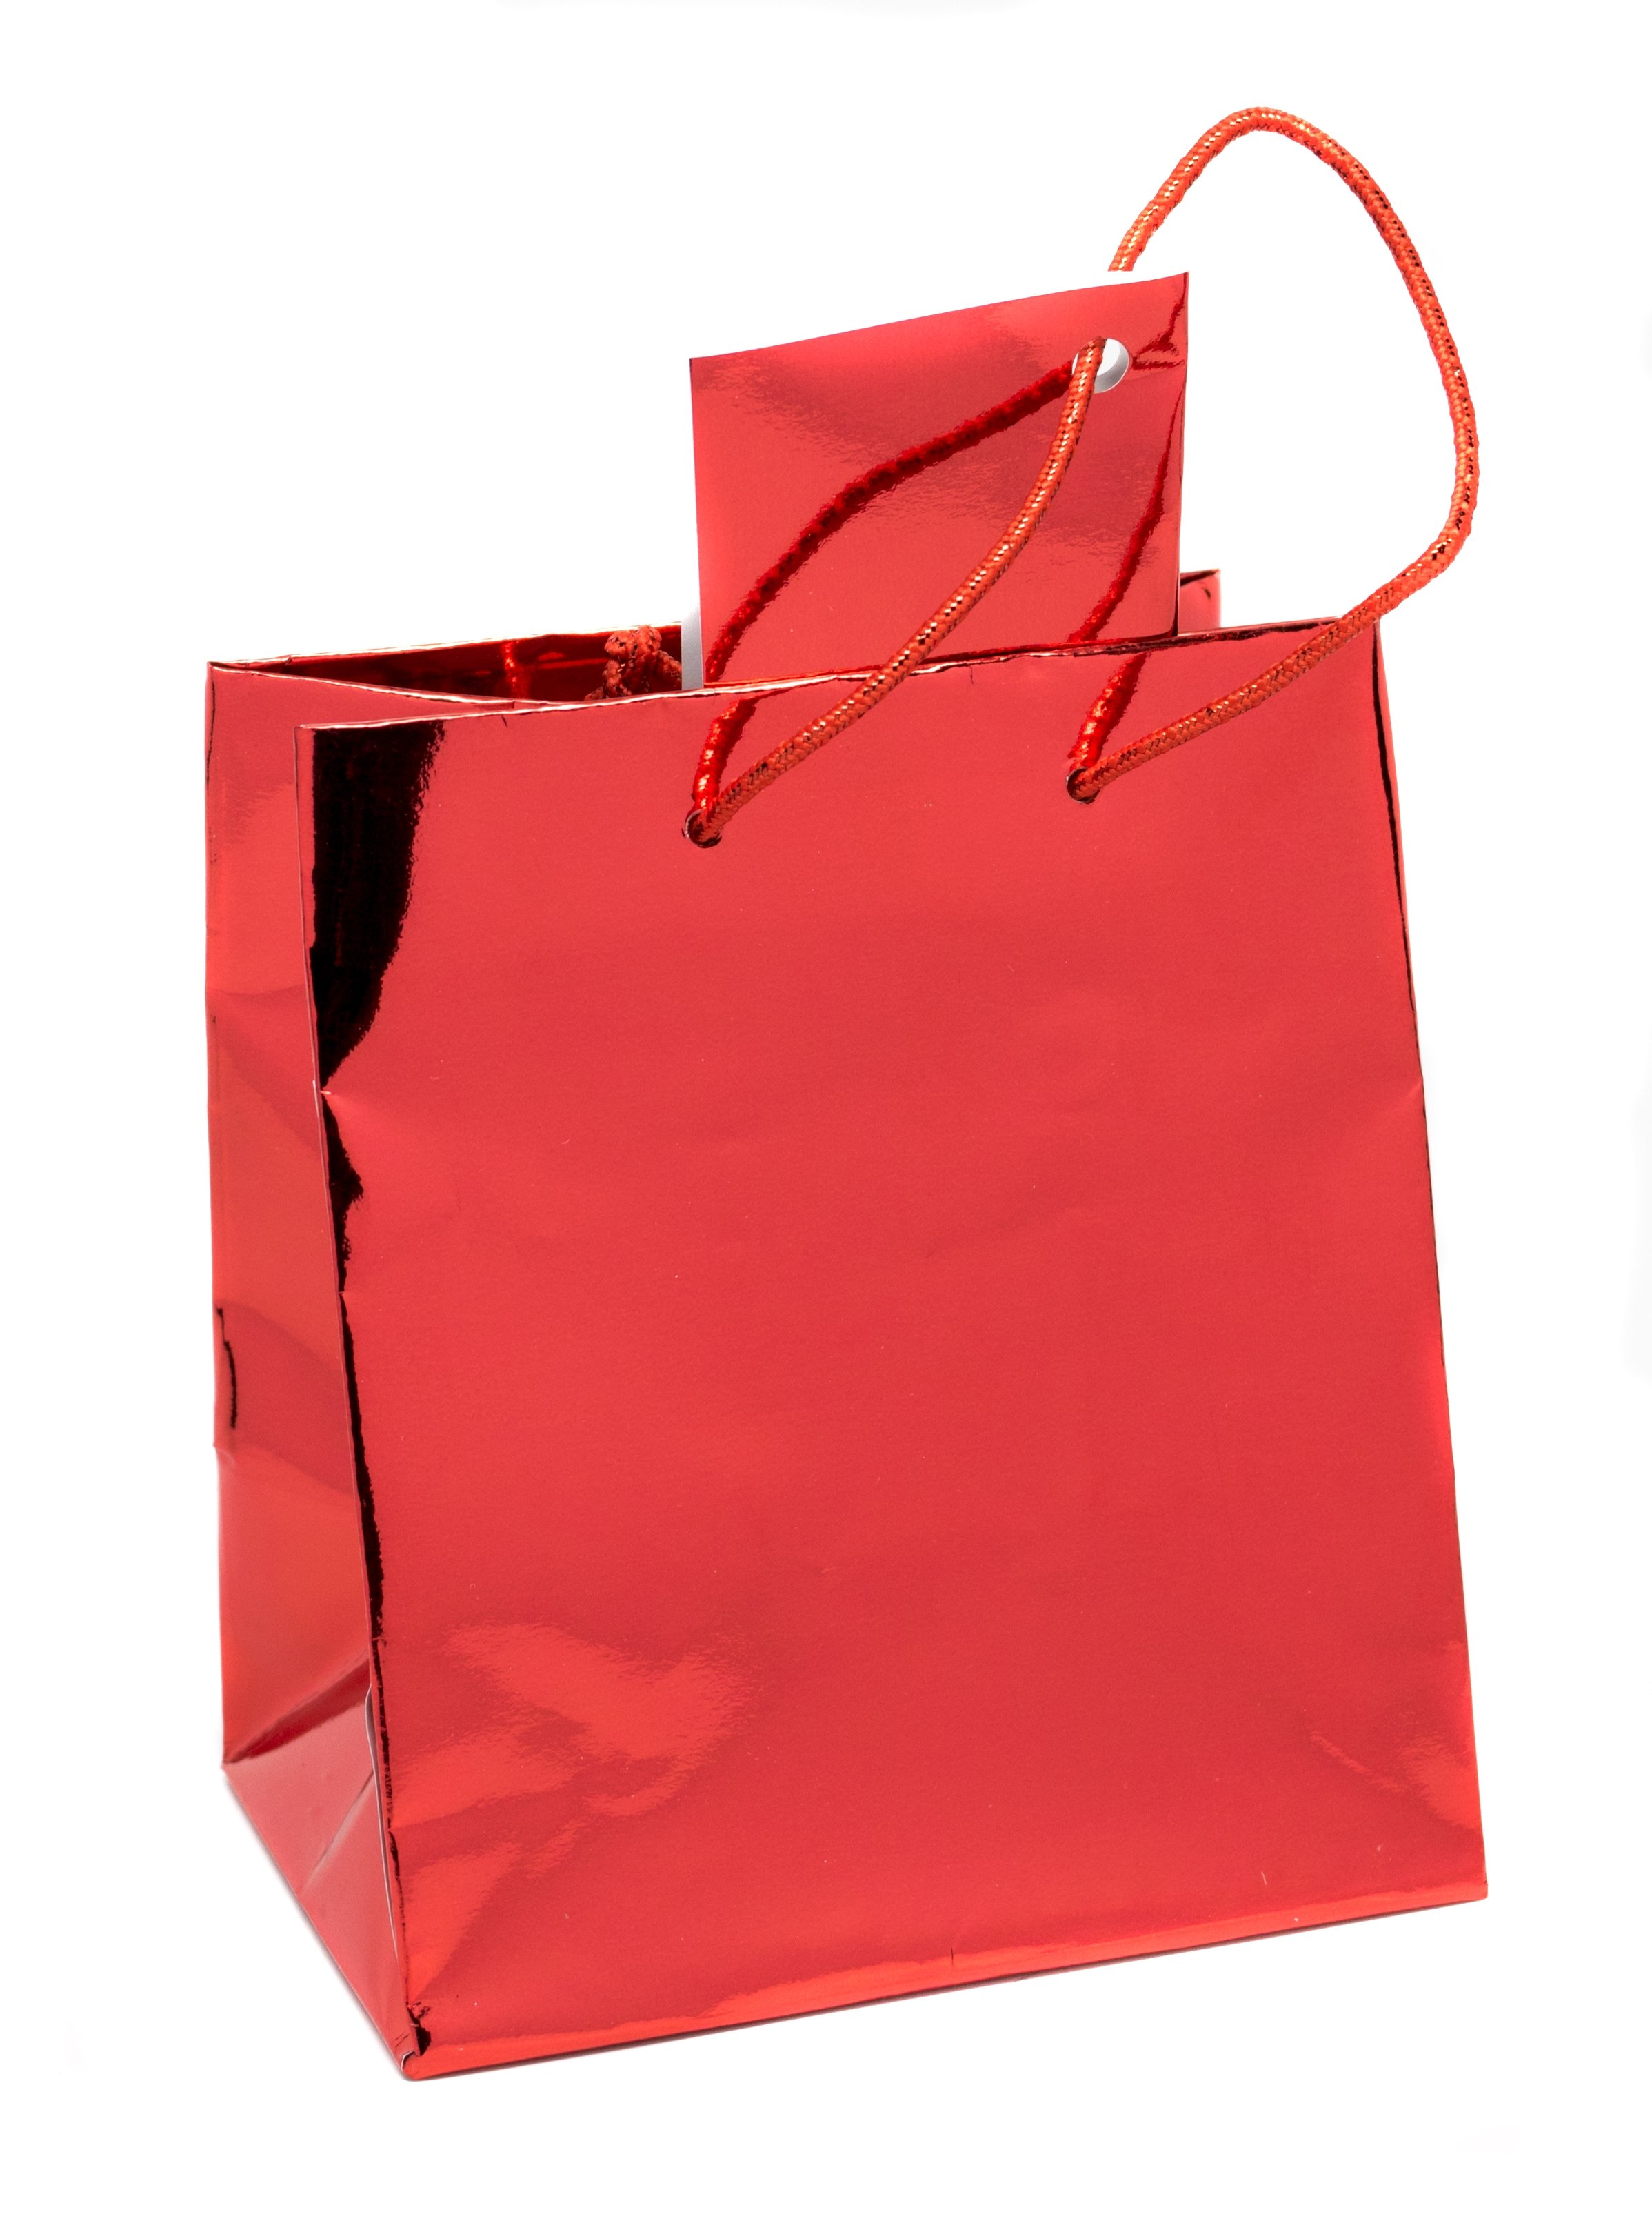 Download Novel Box™ Metallic Glossy Euro Tote Paper Gift Bag Bundle, 20 pack | eBay